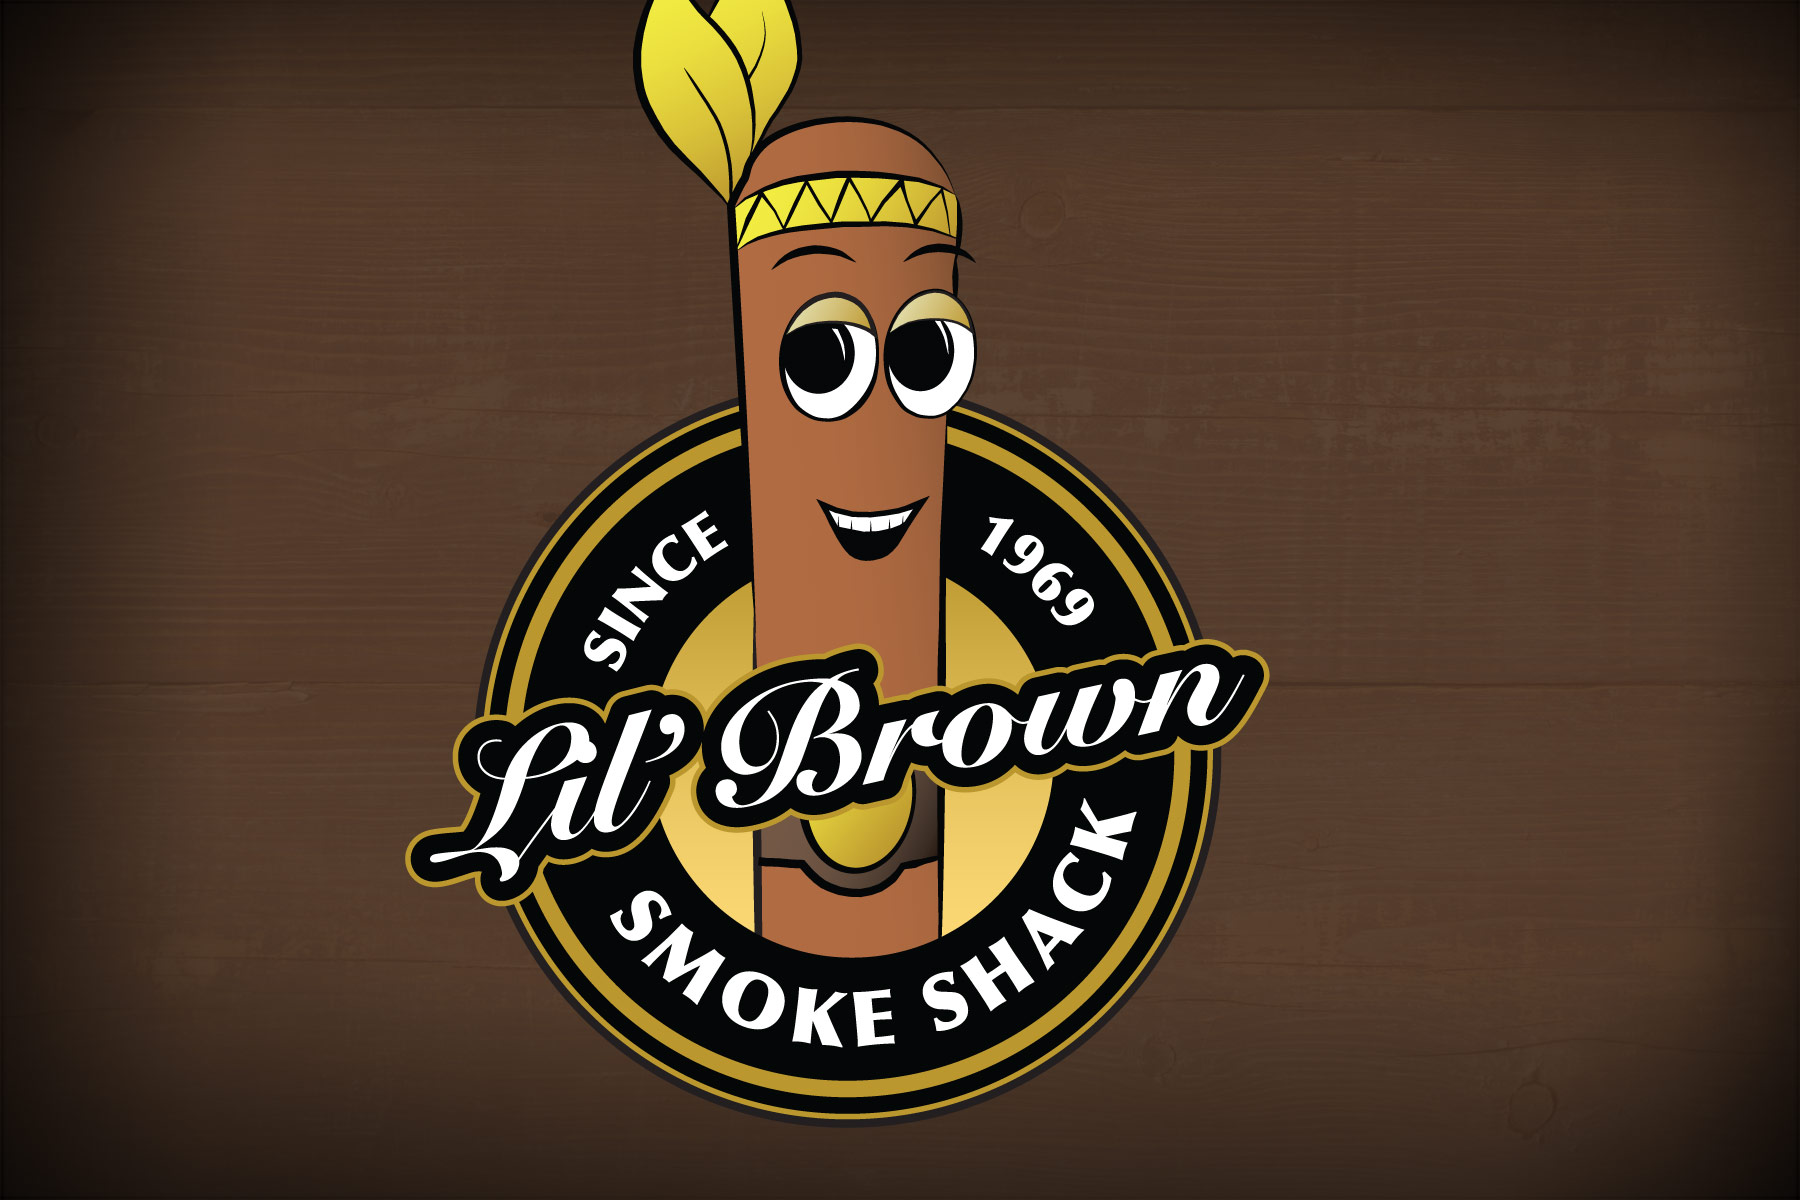 Lil Brown Smoke Shack